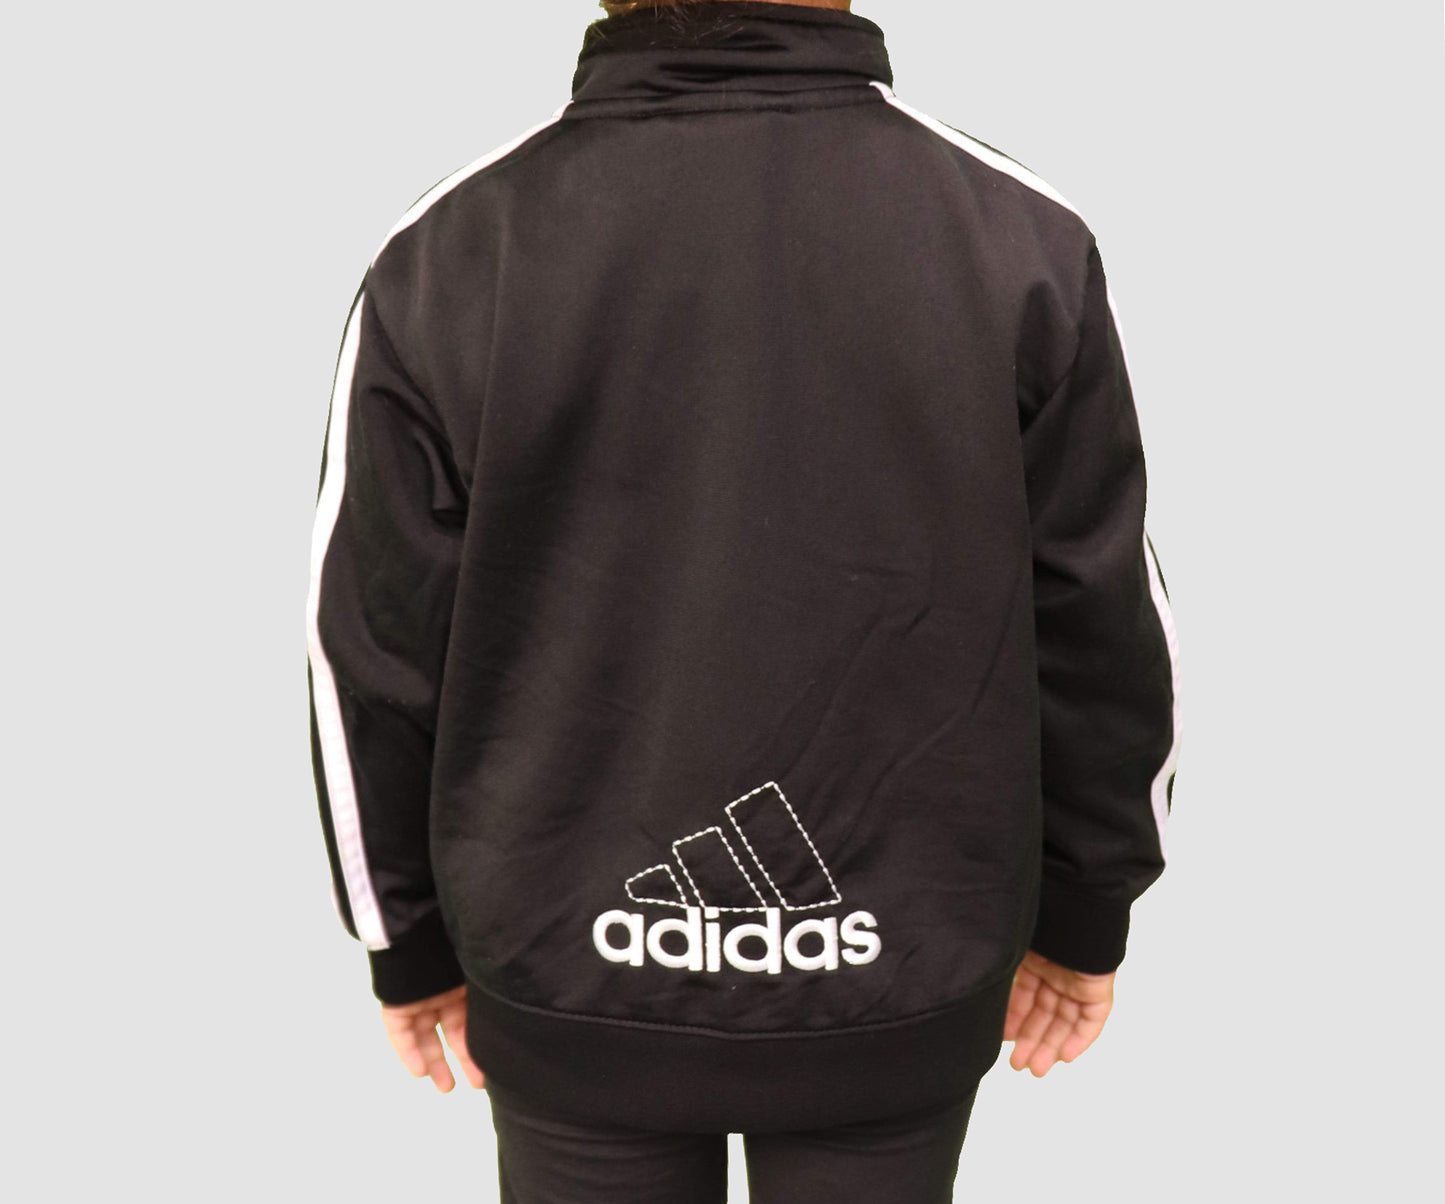 Adidas Apparel 3 Years / Black Track Sport Jacket